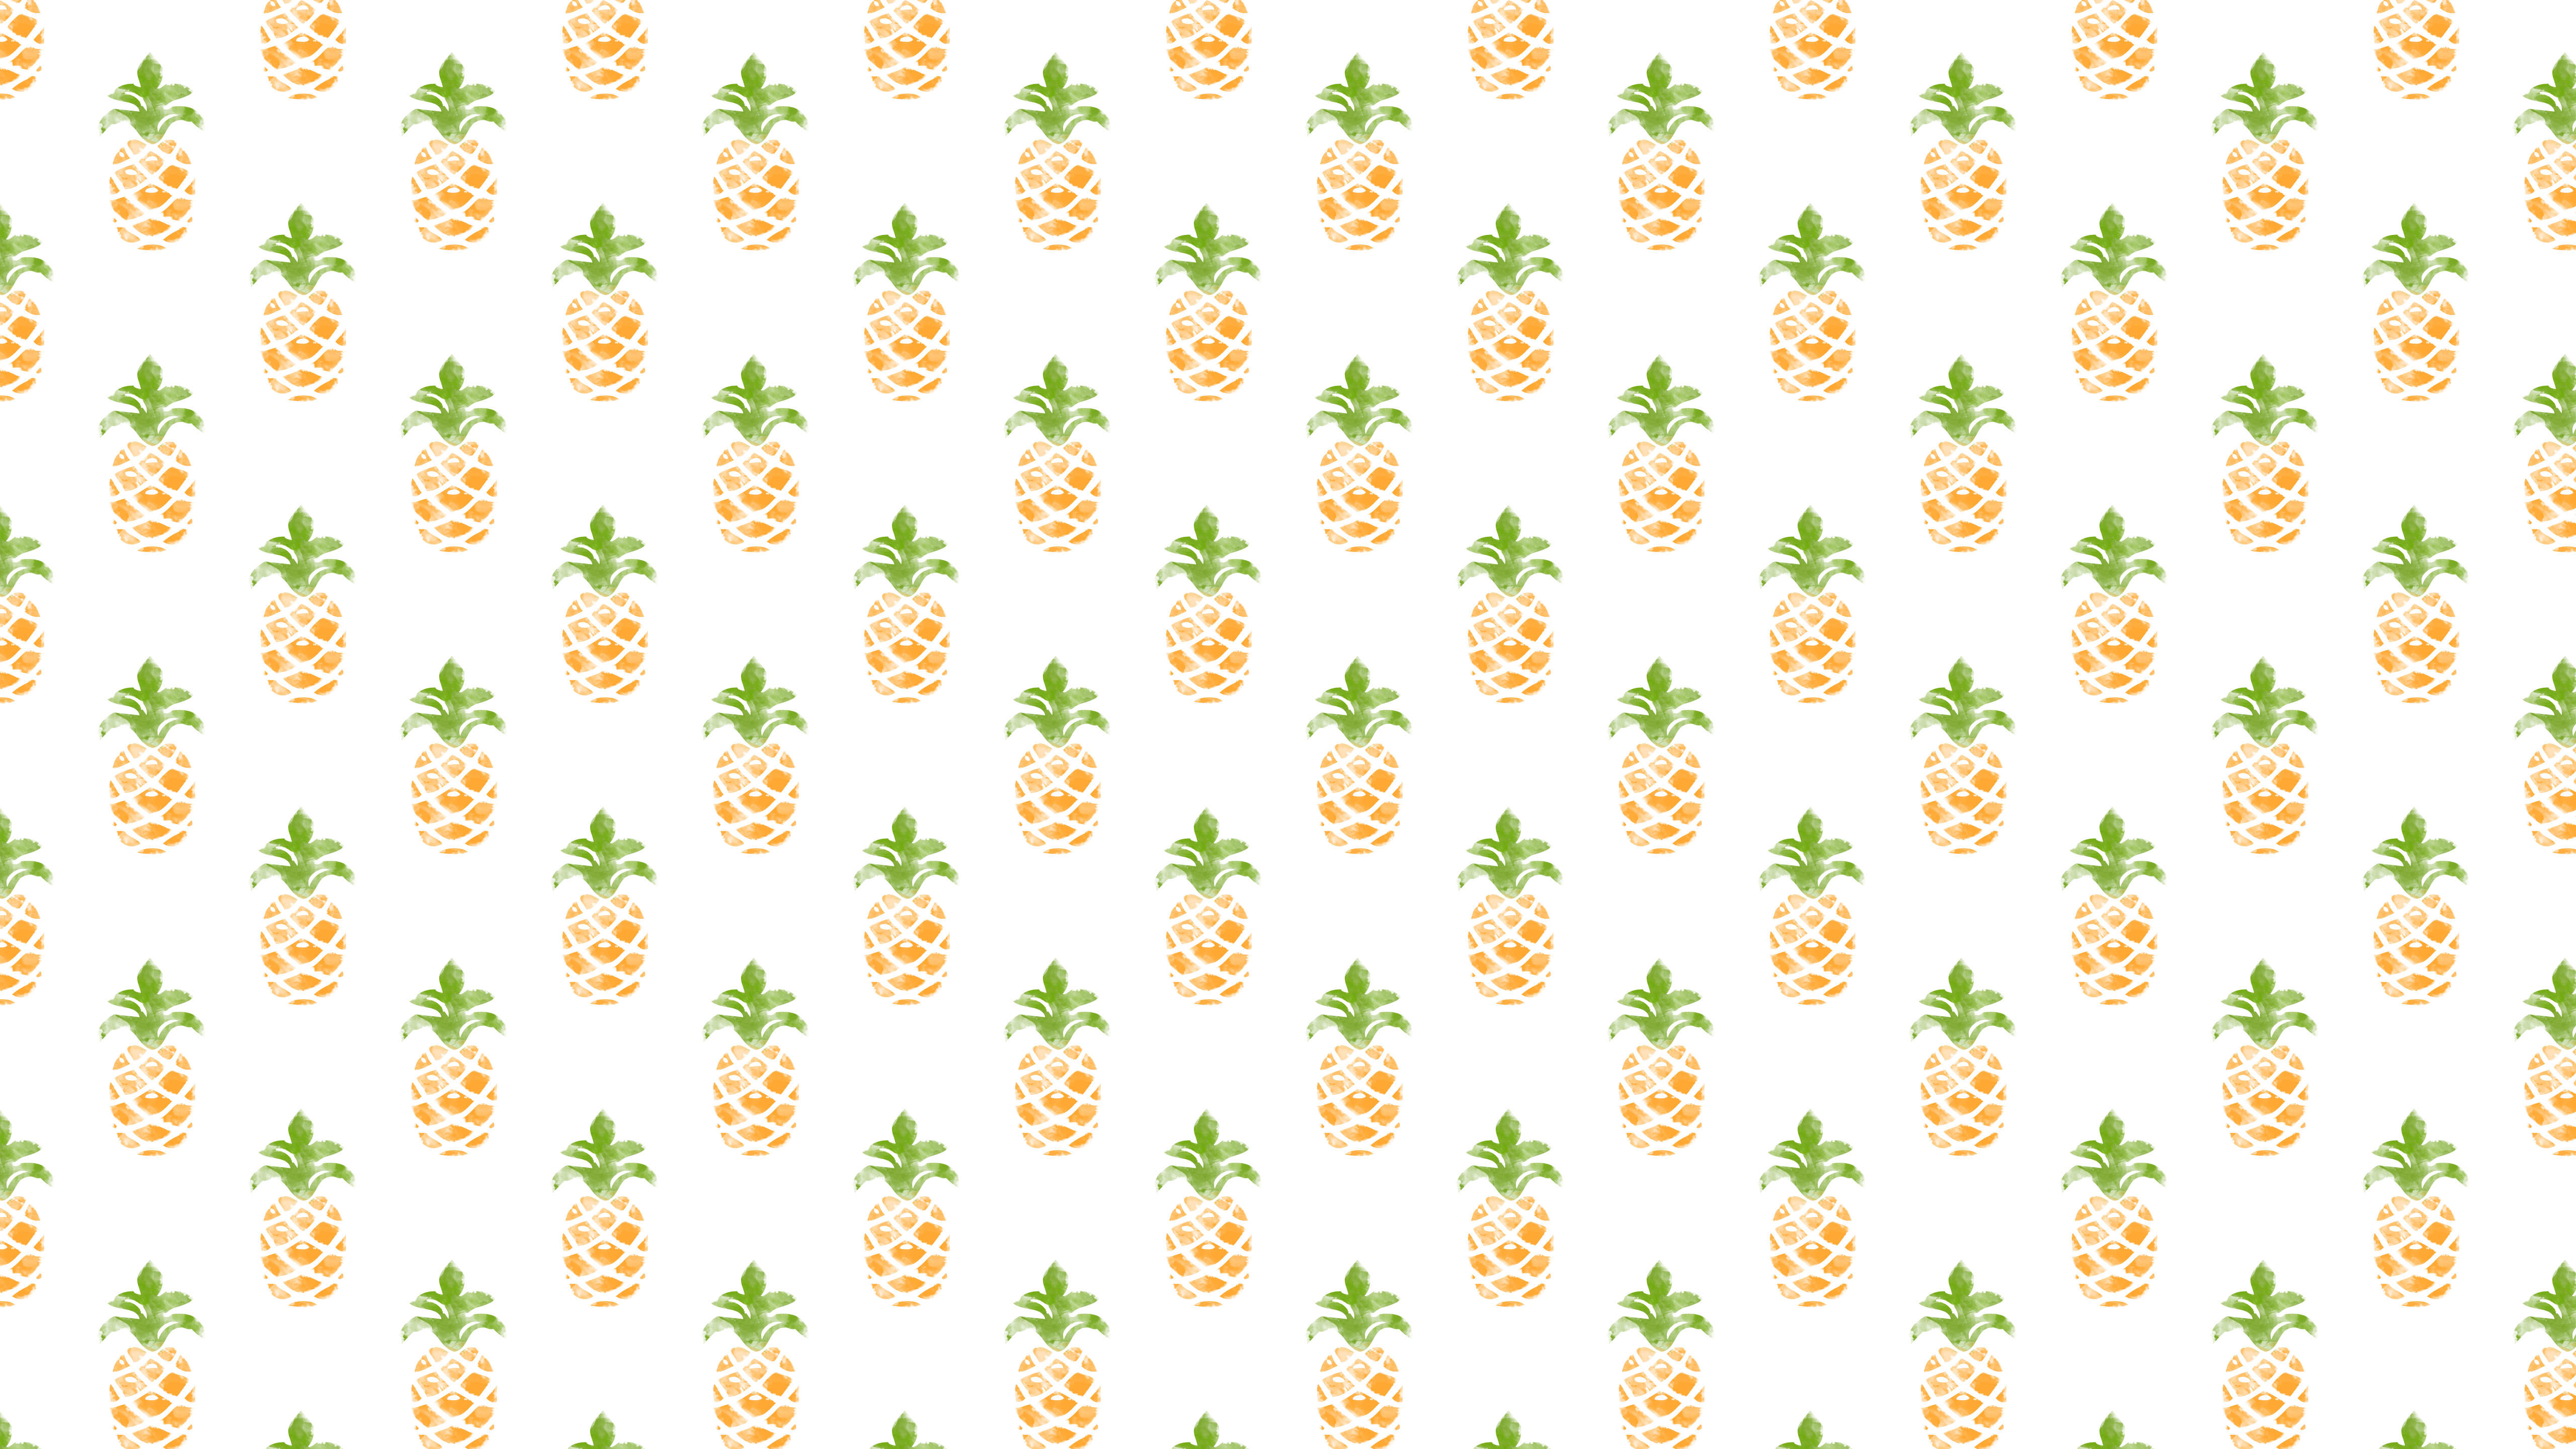 Pineapple Wallpaper, Ananas Wallpaper, Ananas Duvar Kad, Pineapple Backgrounds